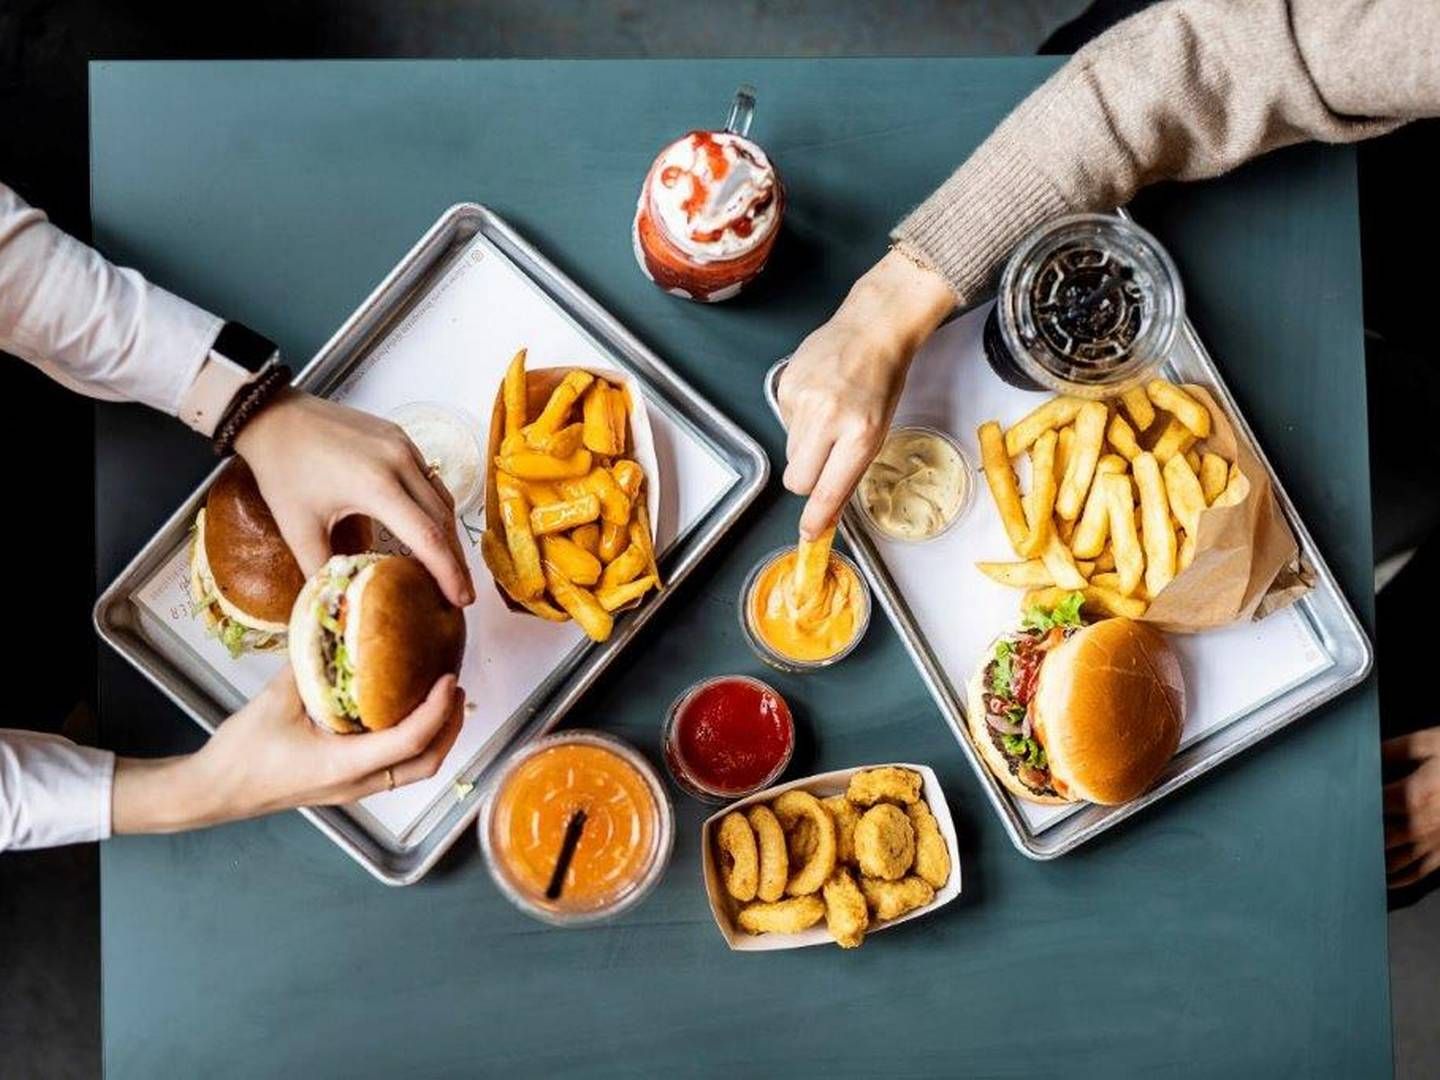 Foto: Pr / The Burger Concept